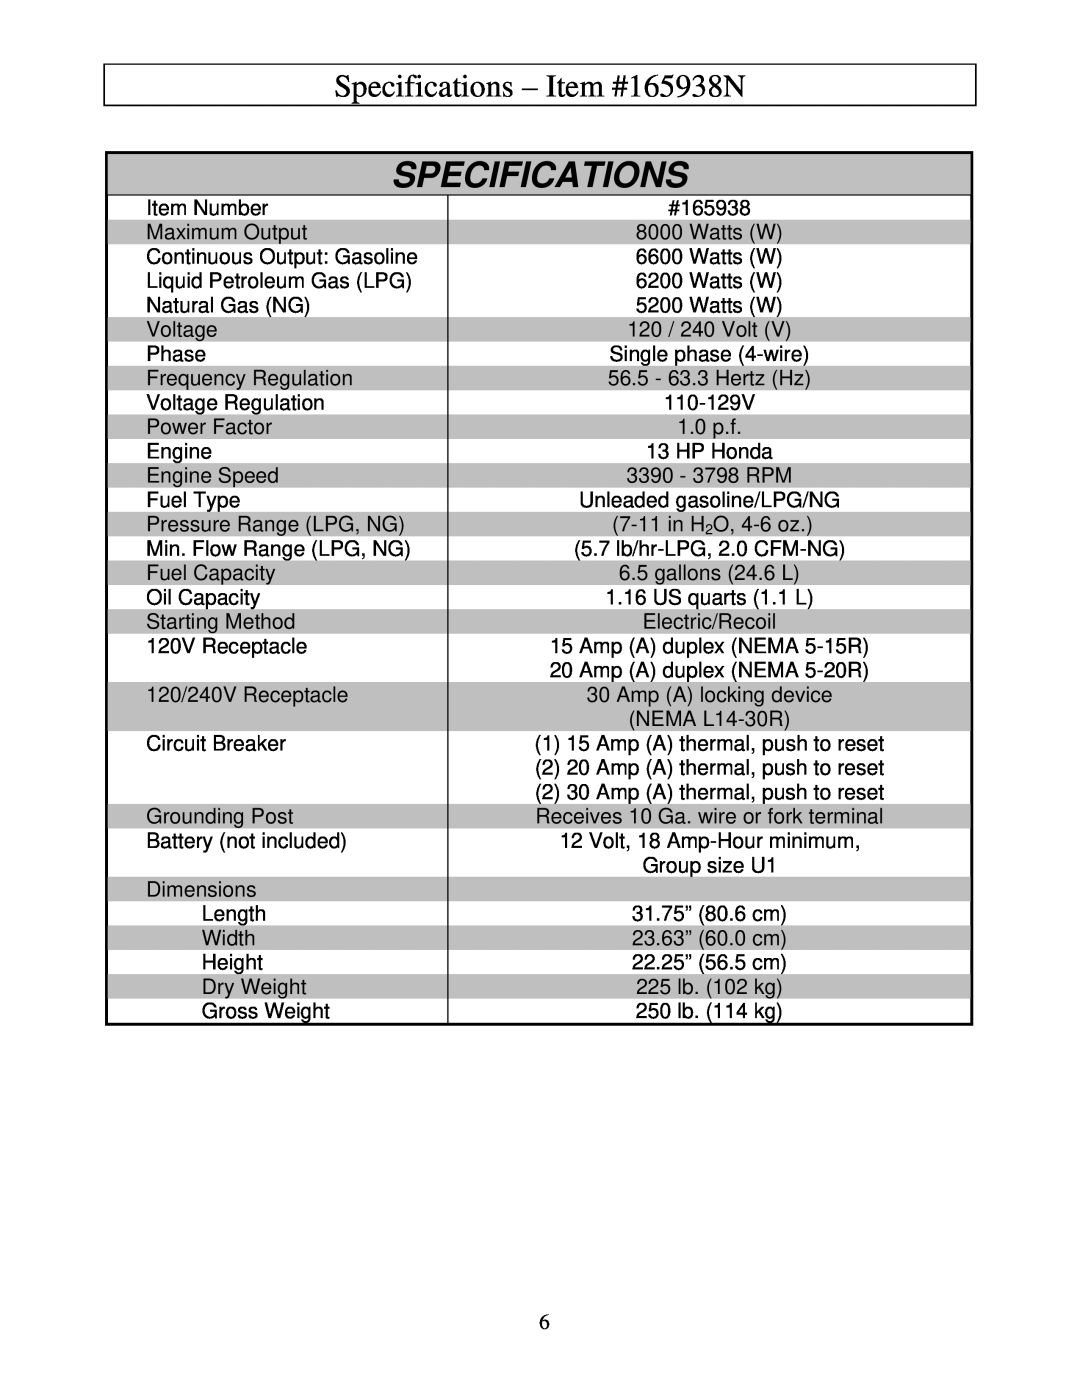 North Star M165938N owner manual Specifications - Item #165938N 